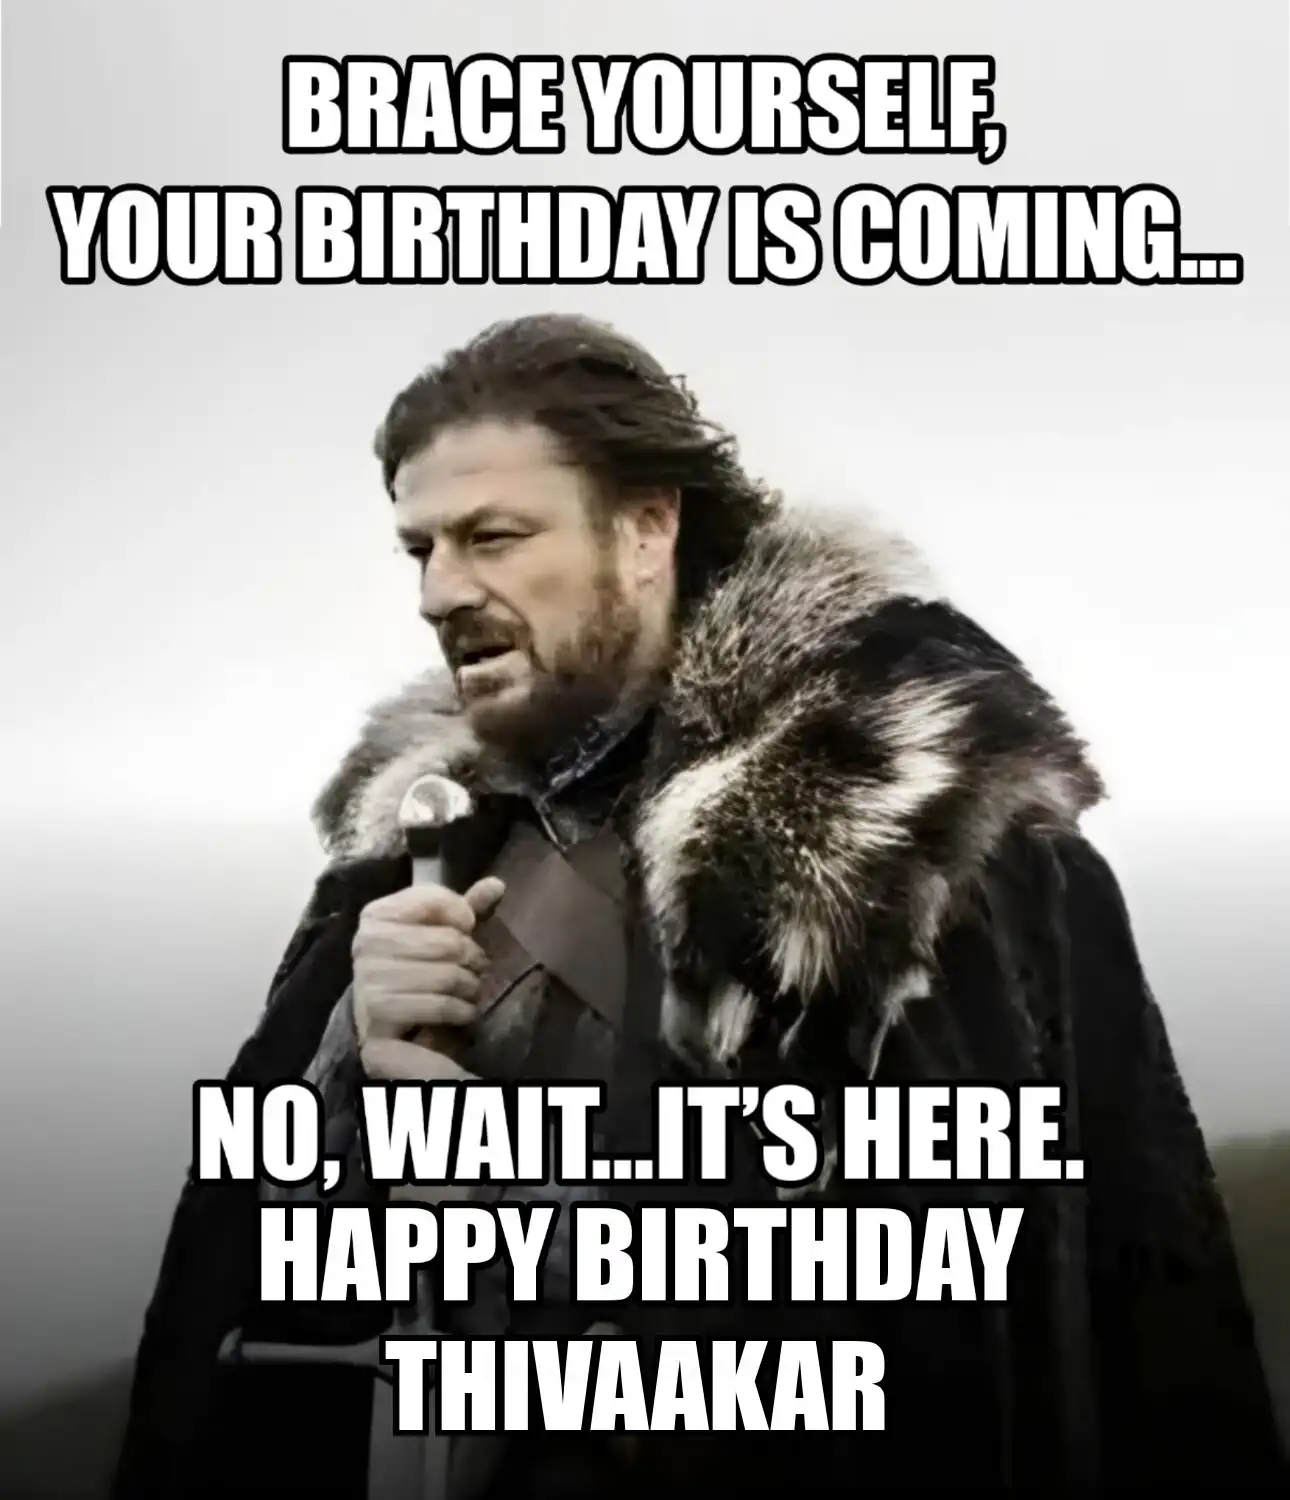 Happy Birthday Thivaakar Brace Yourself Your Birthday Is Coming Meme